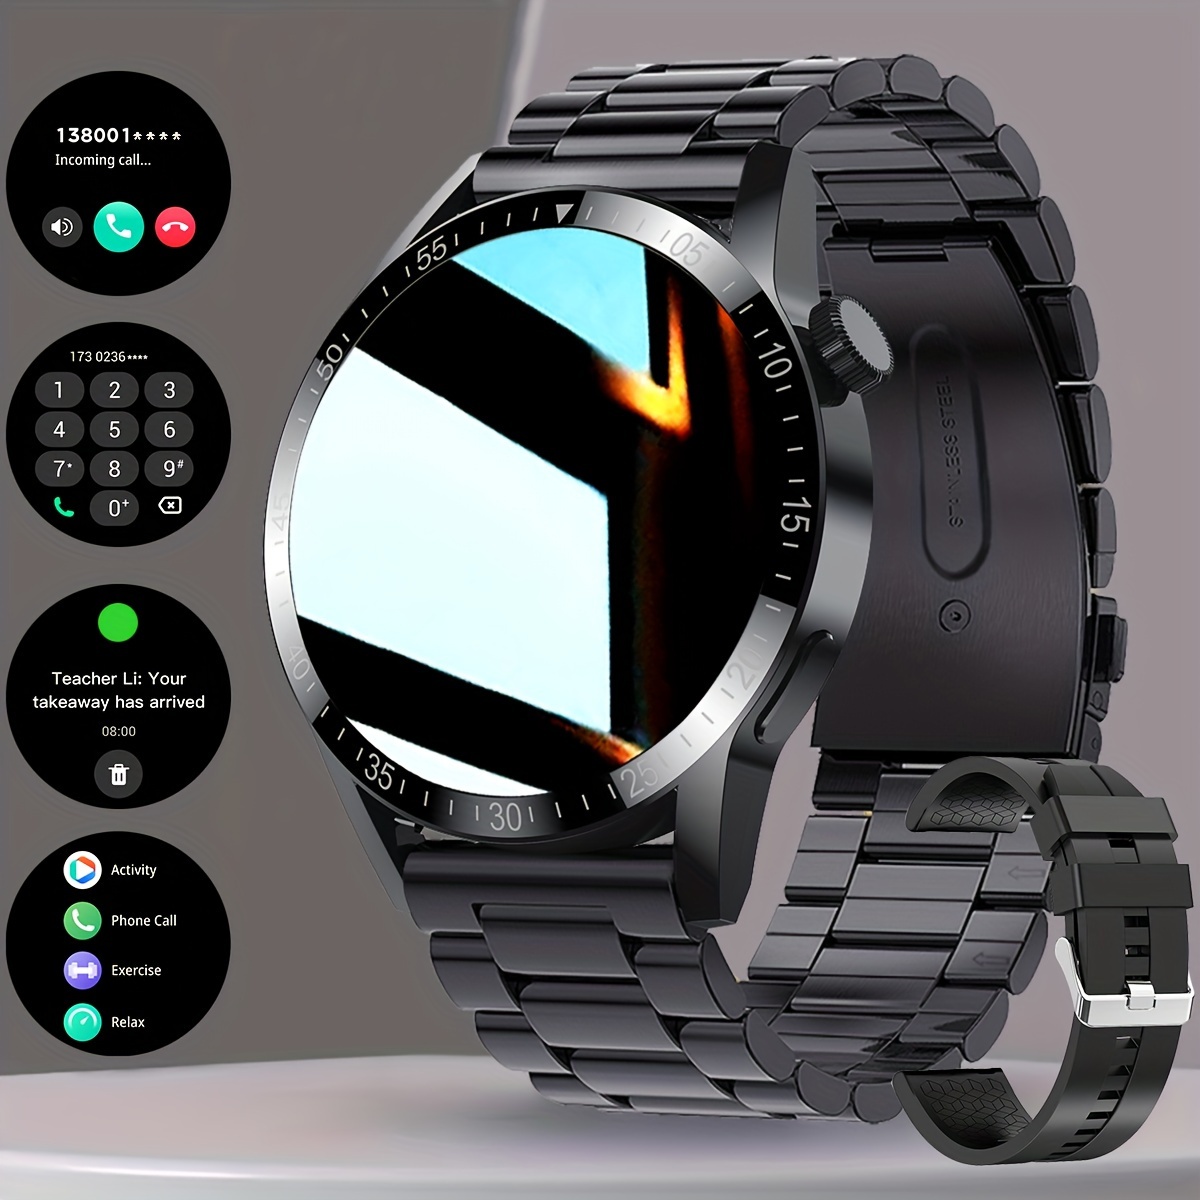 

New Men's Smart Watch With Wireless Call, Message Reminder, Custom Wallpaper, Sport Mode, Activity For Smartphones